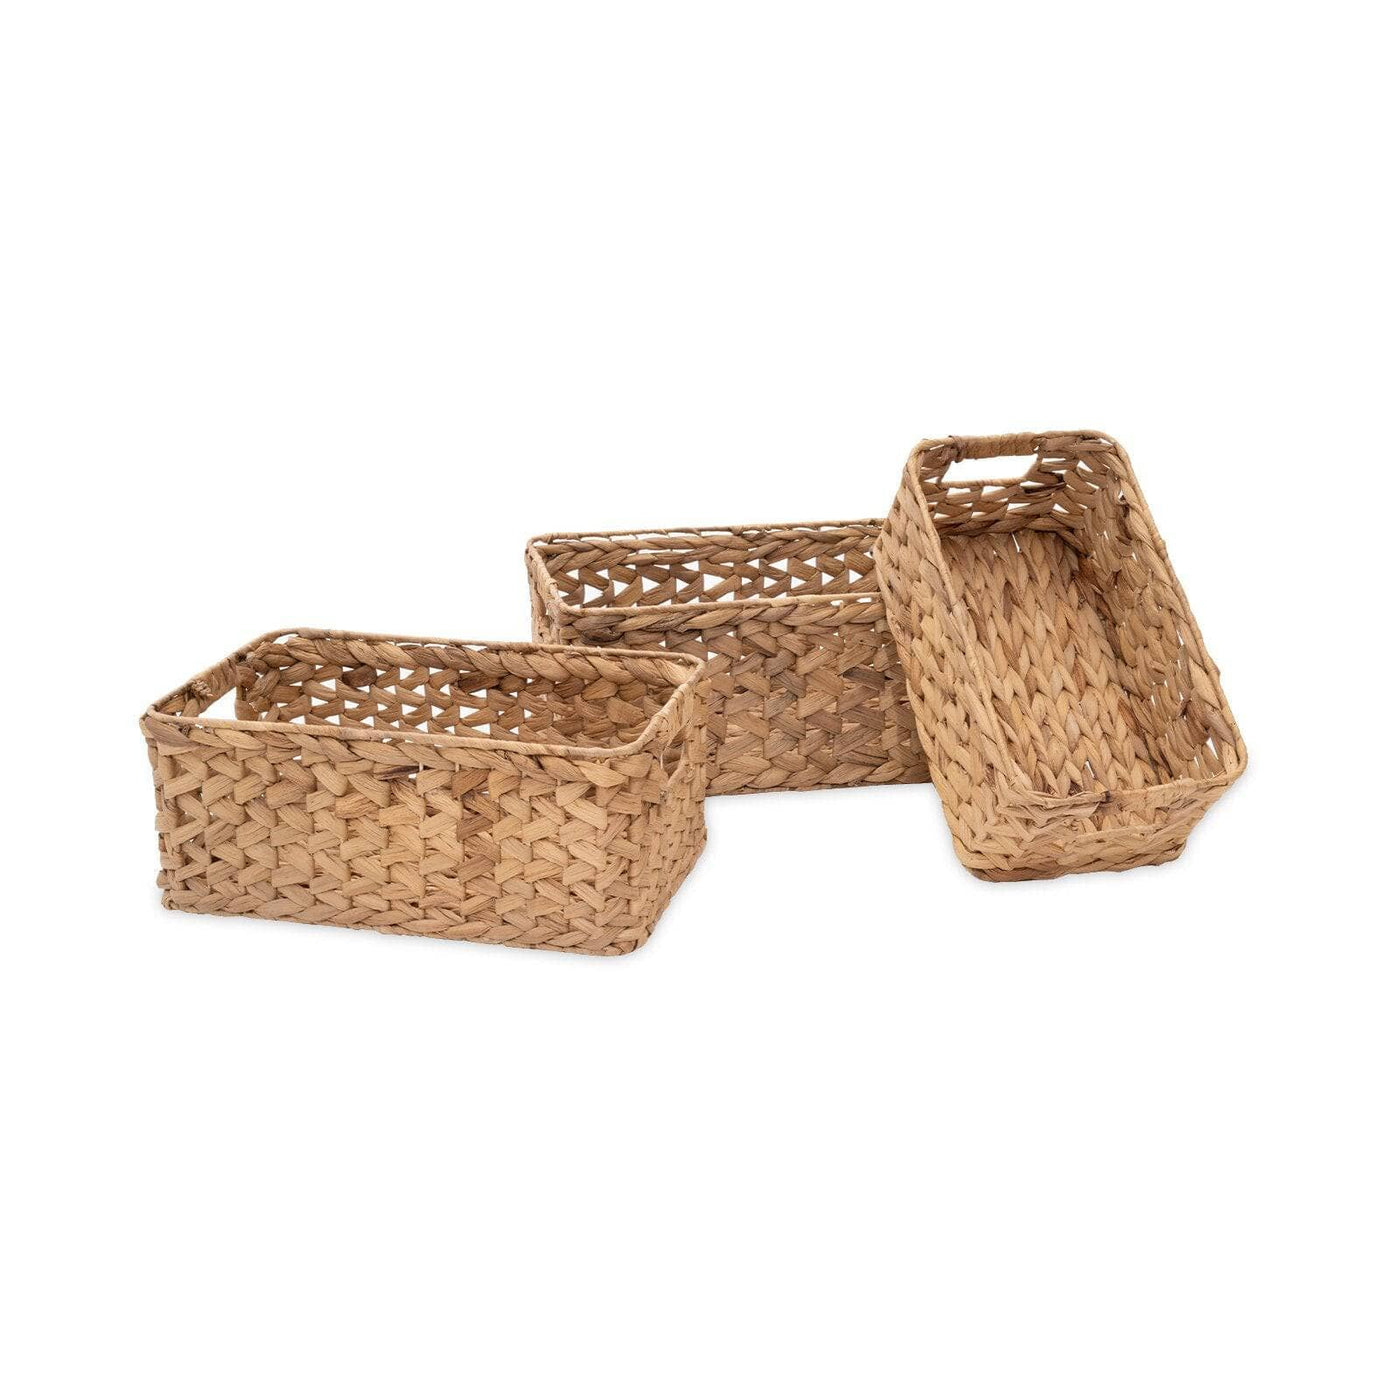 William Water Hyacinth Laundry Box Basket, Natural, XL - 4